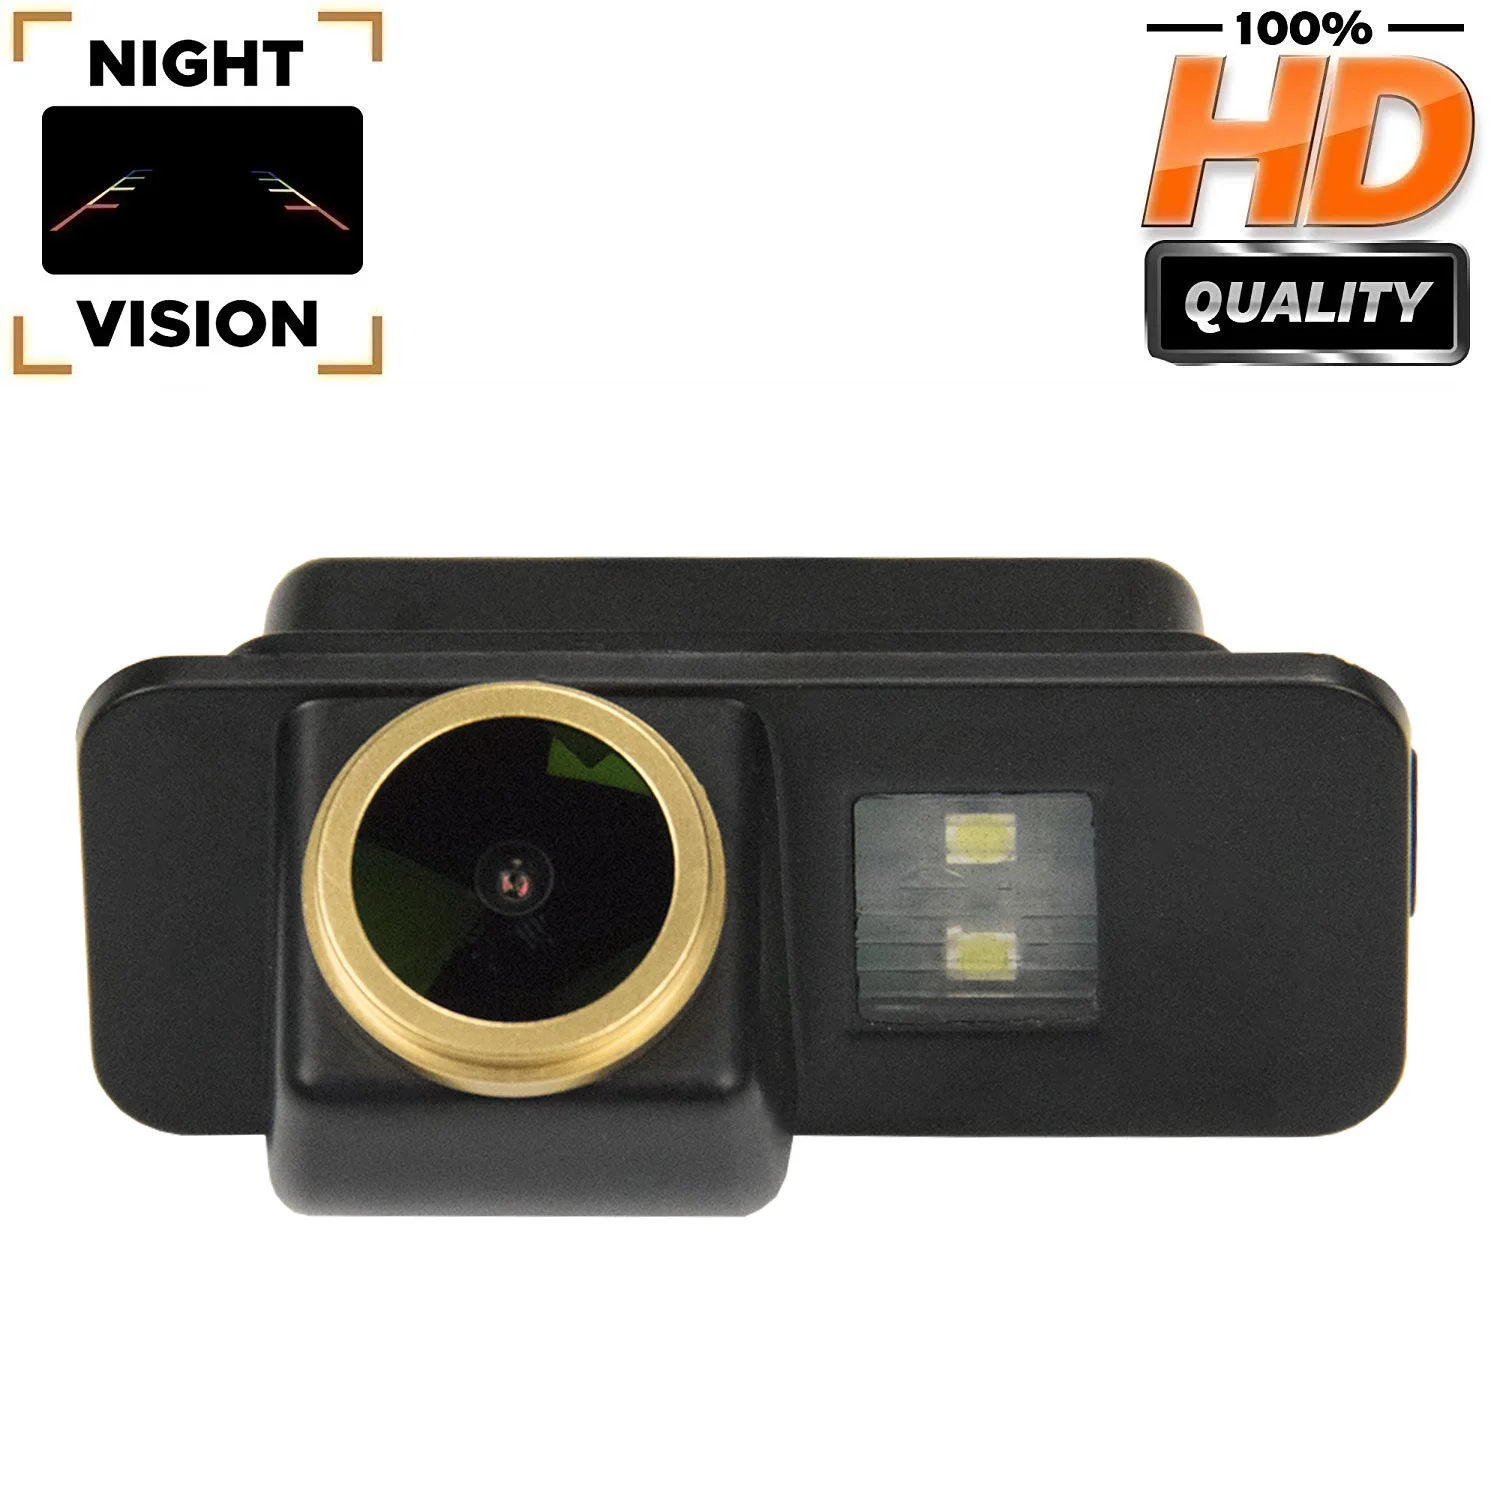 

HD 720p Rear View Backup Camera for FORD Ranger Fiesta/Kuga/S-Max/Mondeo/Focus II , Reversing Backup License Plate Light Camera